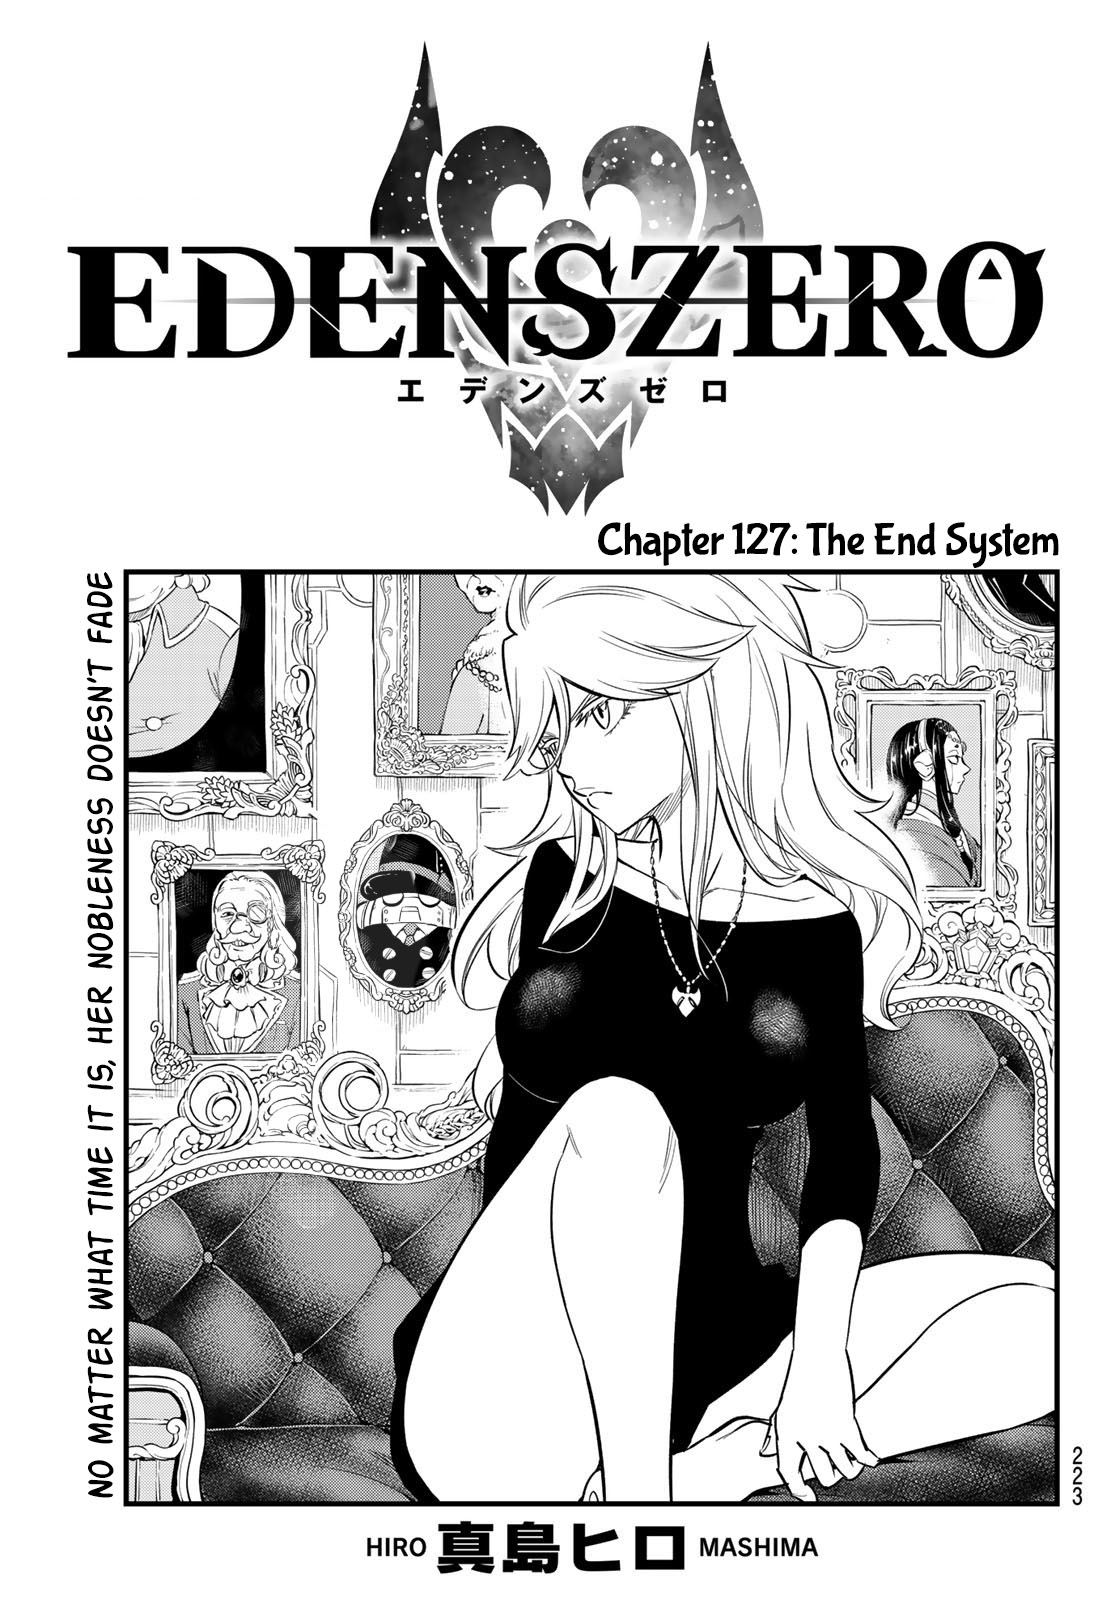 Edens Zero Ch. 127 The End System